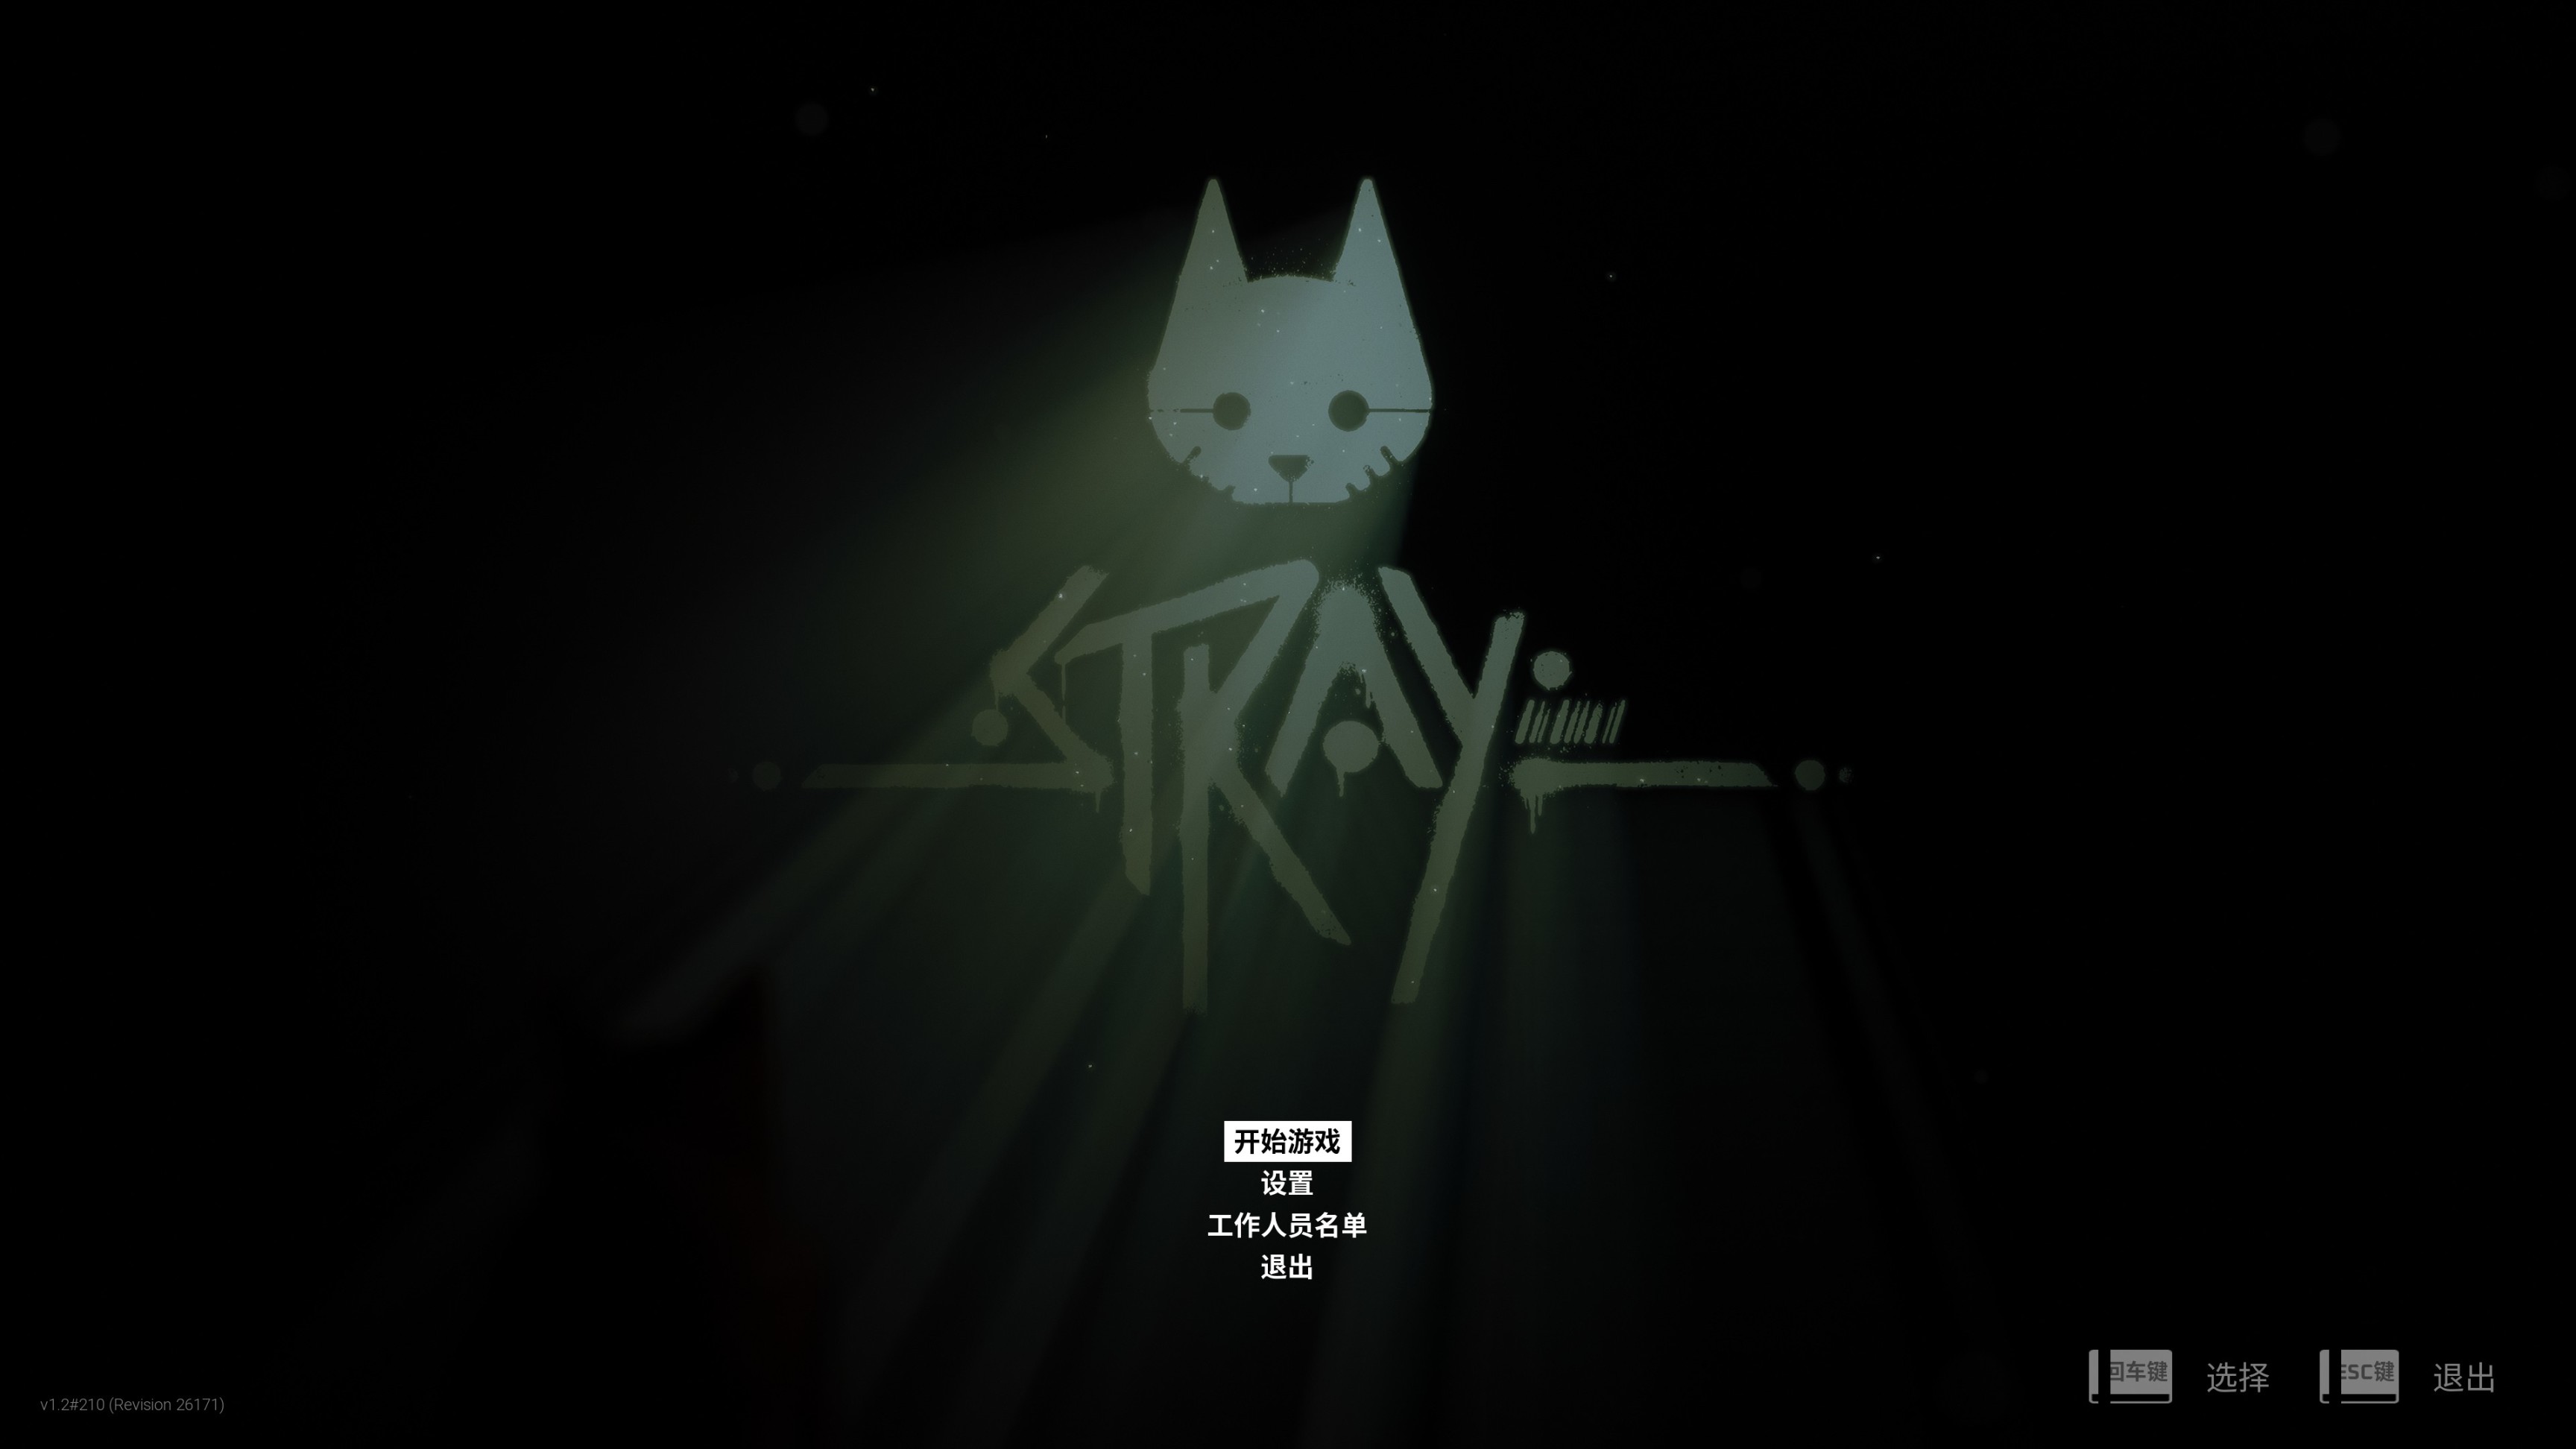 【PC游戏】Stray 评测.. 猫猫要把我融化了( ˙-˙ )-第9张